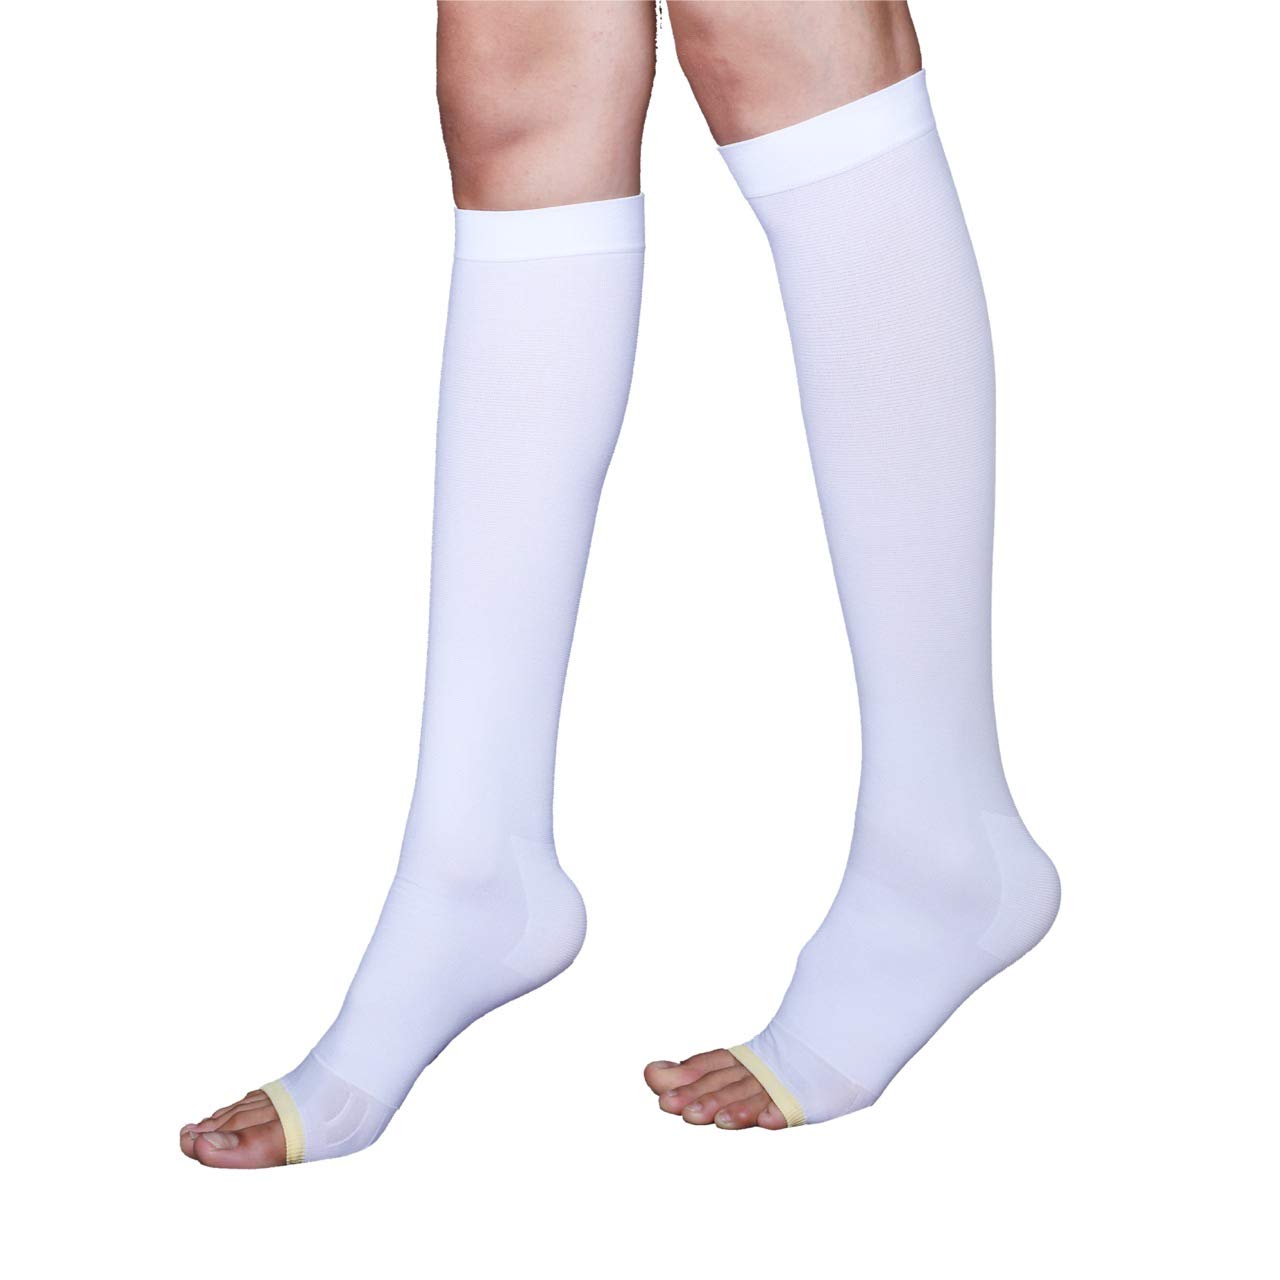 Anti Embolism Stockings Medium Below the Knee - Clinihealth